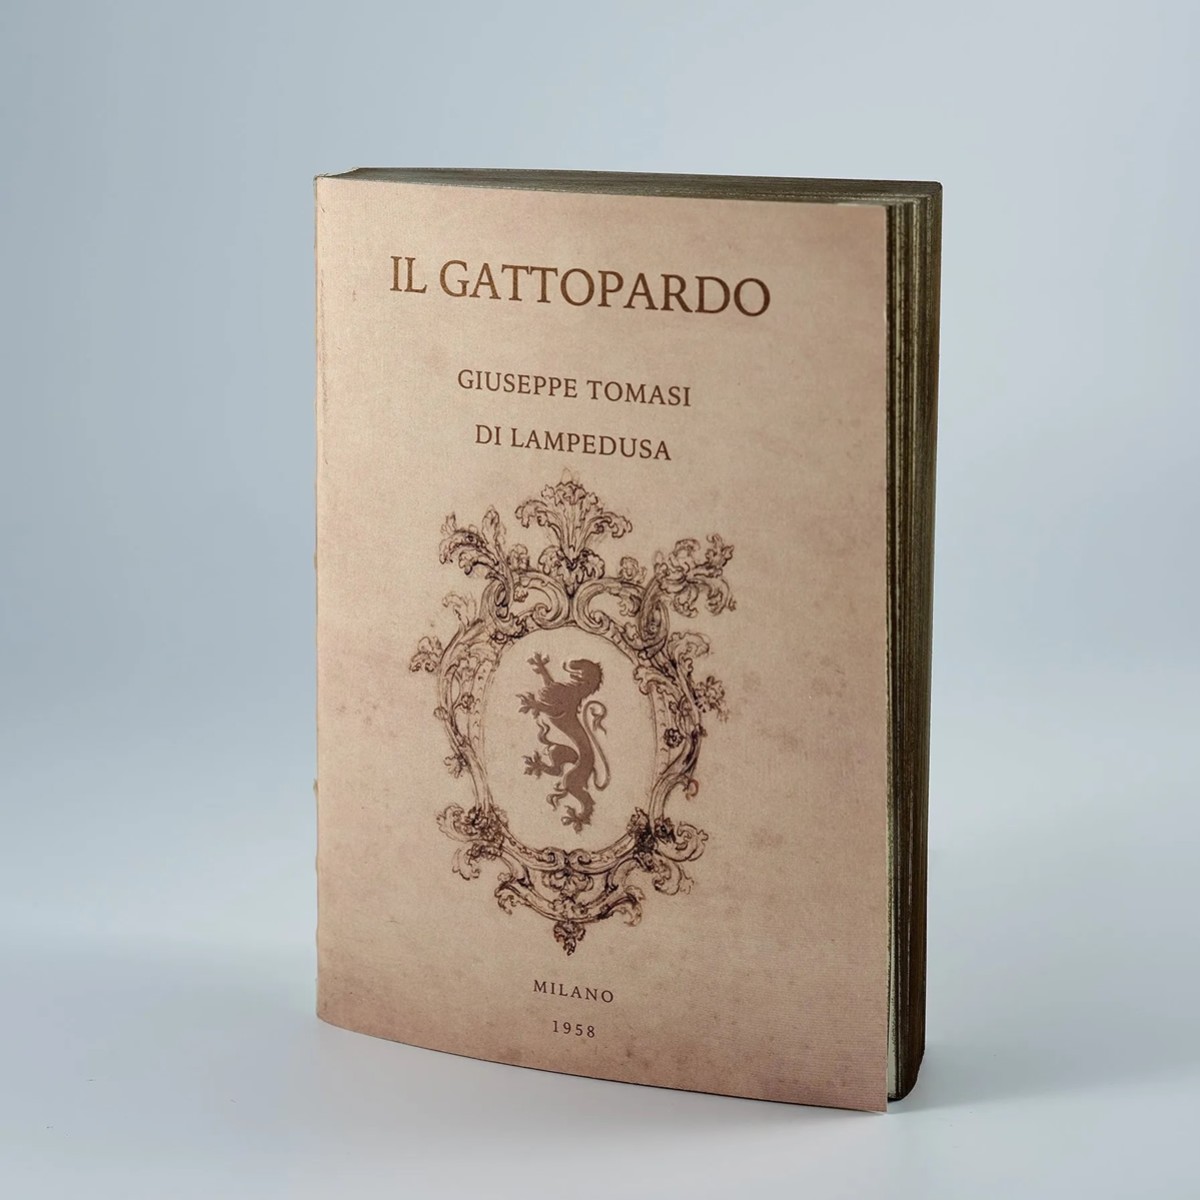 Libri Muti Il Gattopardo - Σημειωματάριο